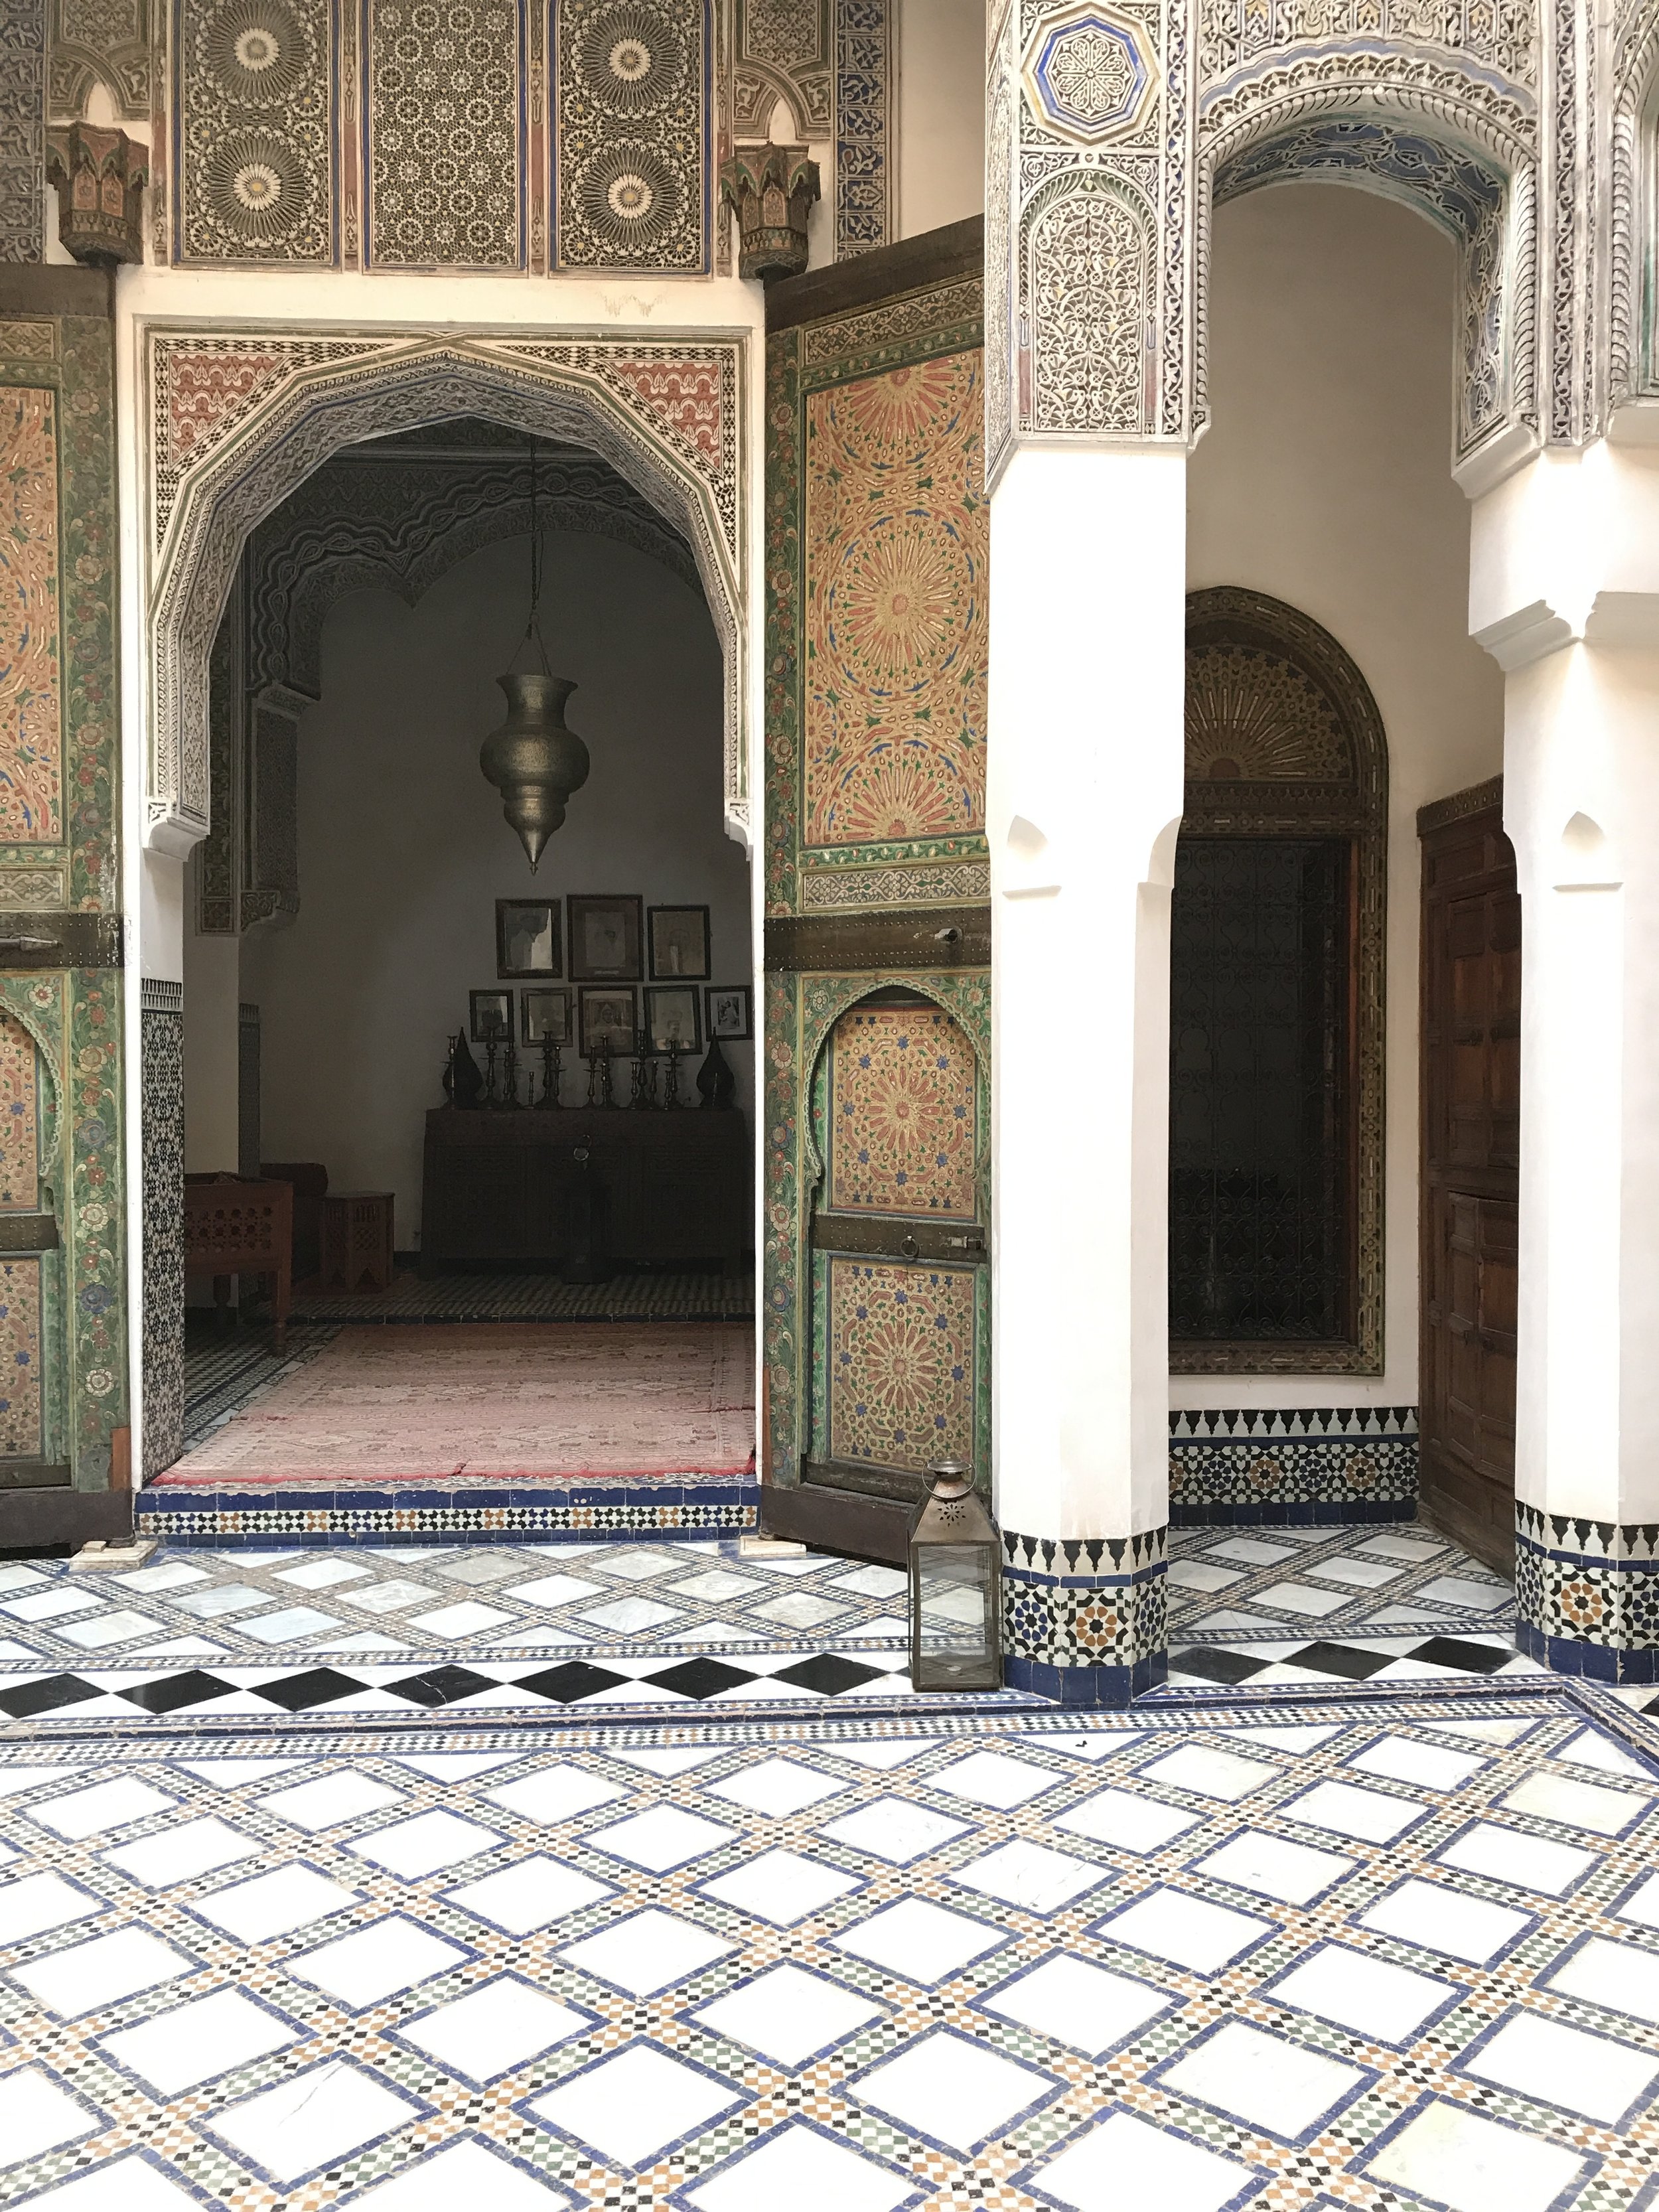  The internal courtyard at Dar Saffarine.  